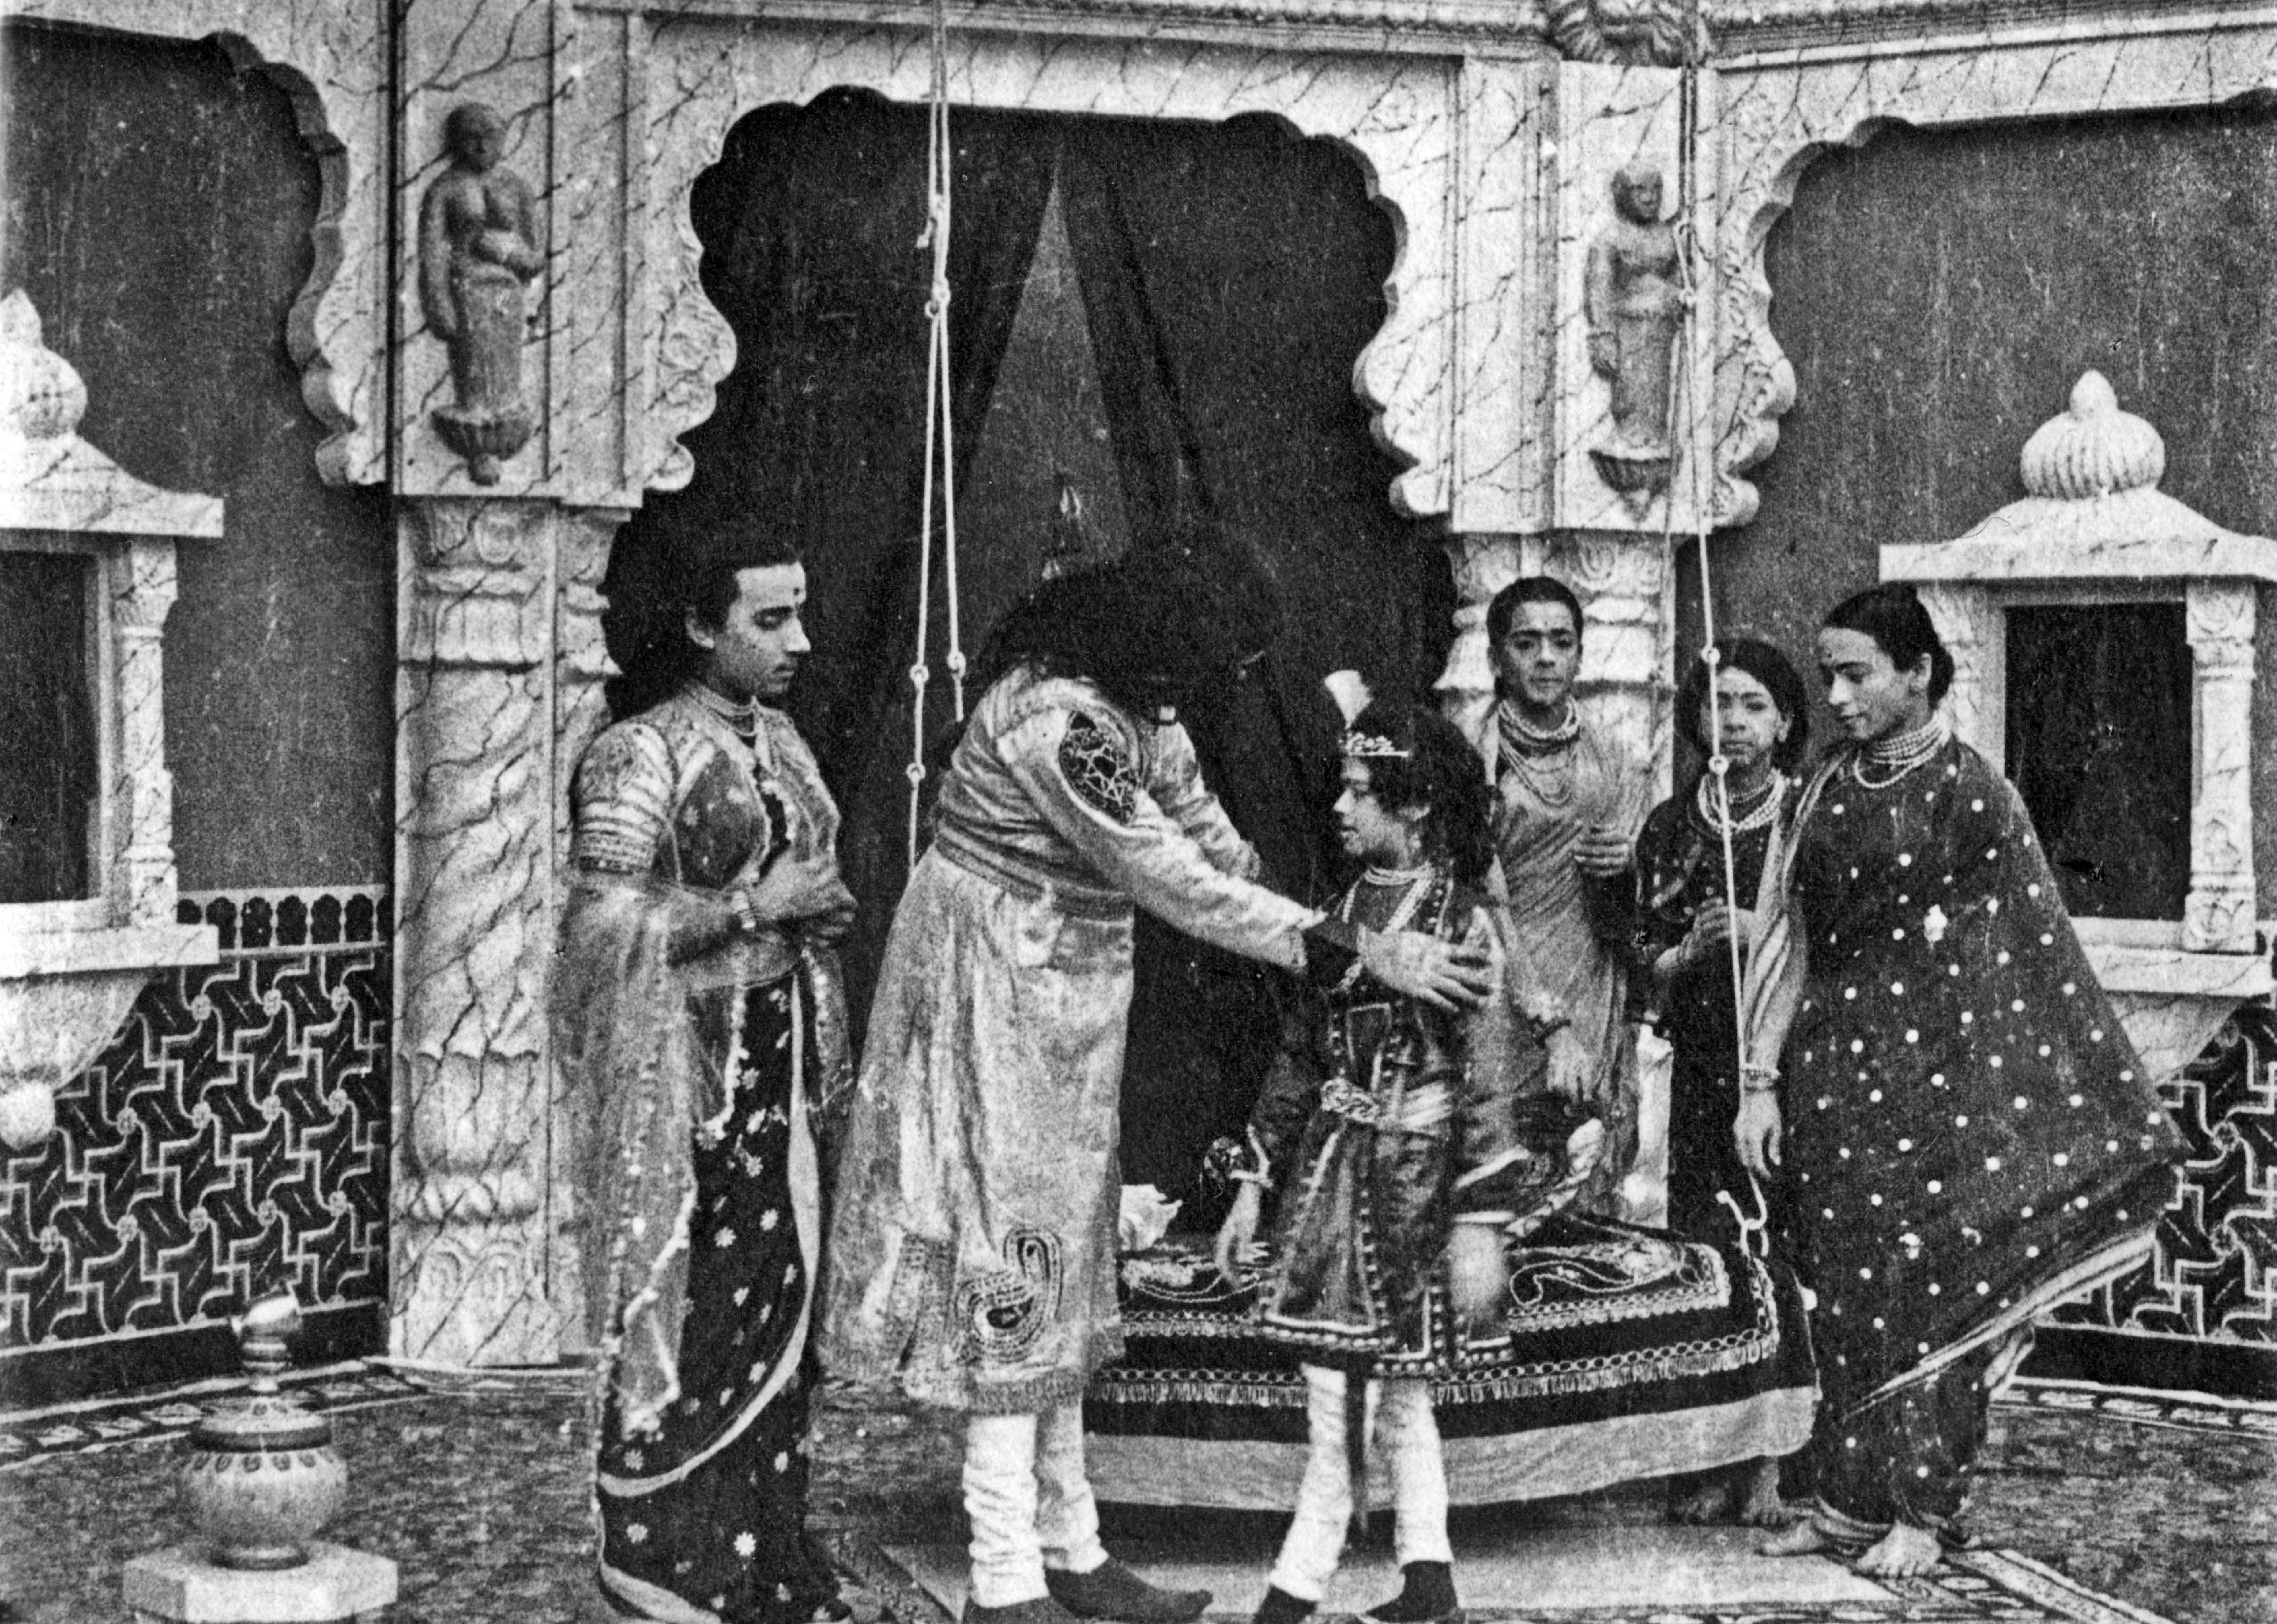 A scene from Raja Harishchandra, a 1913 Indian silent film.